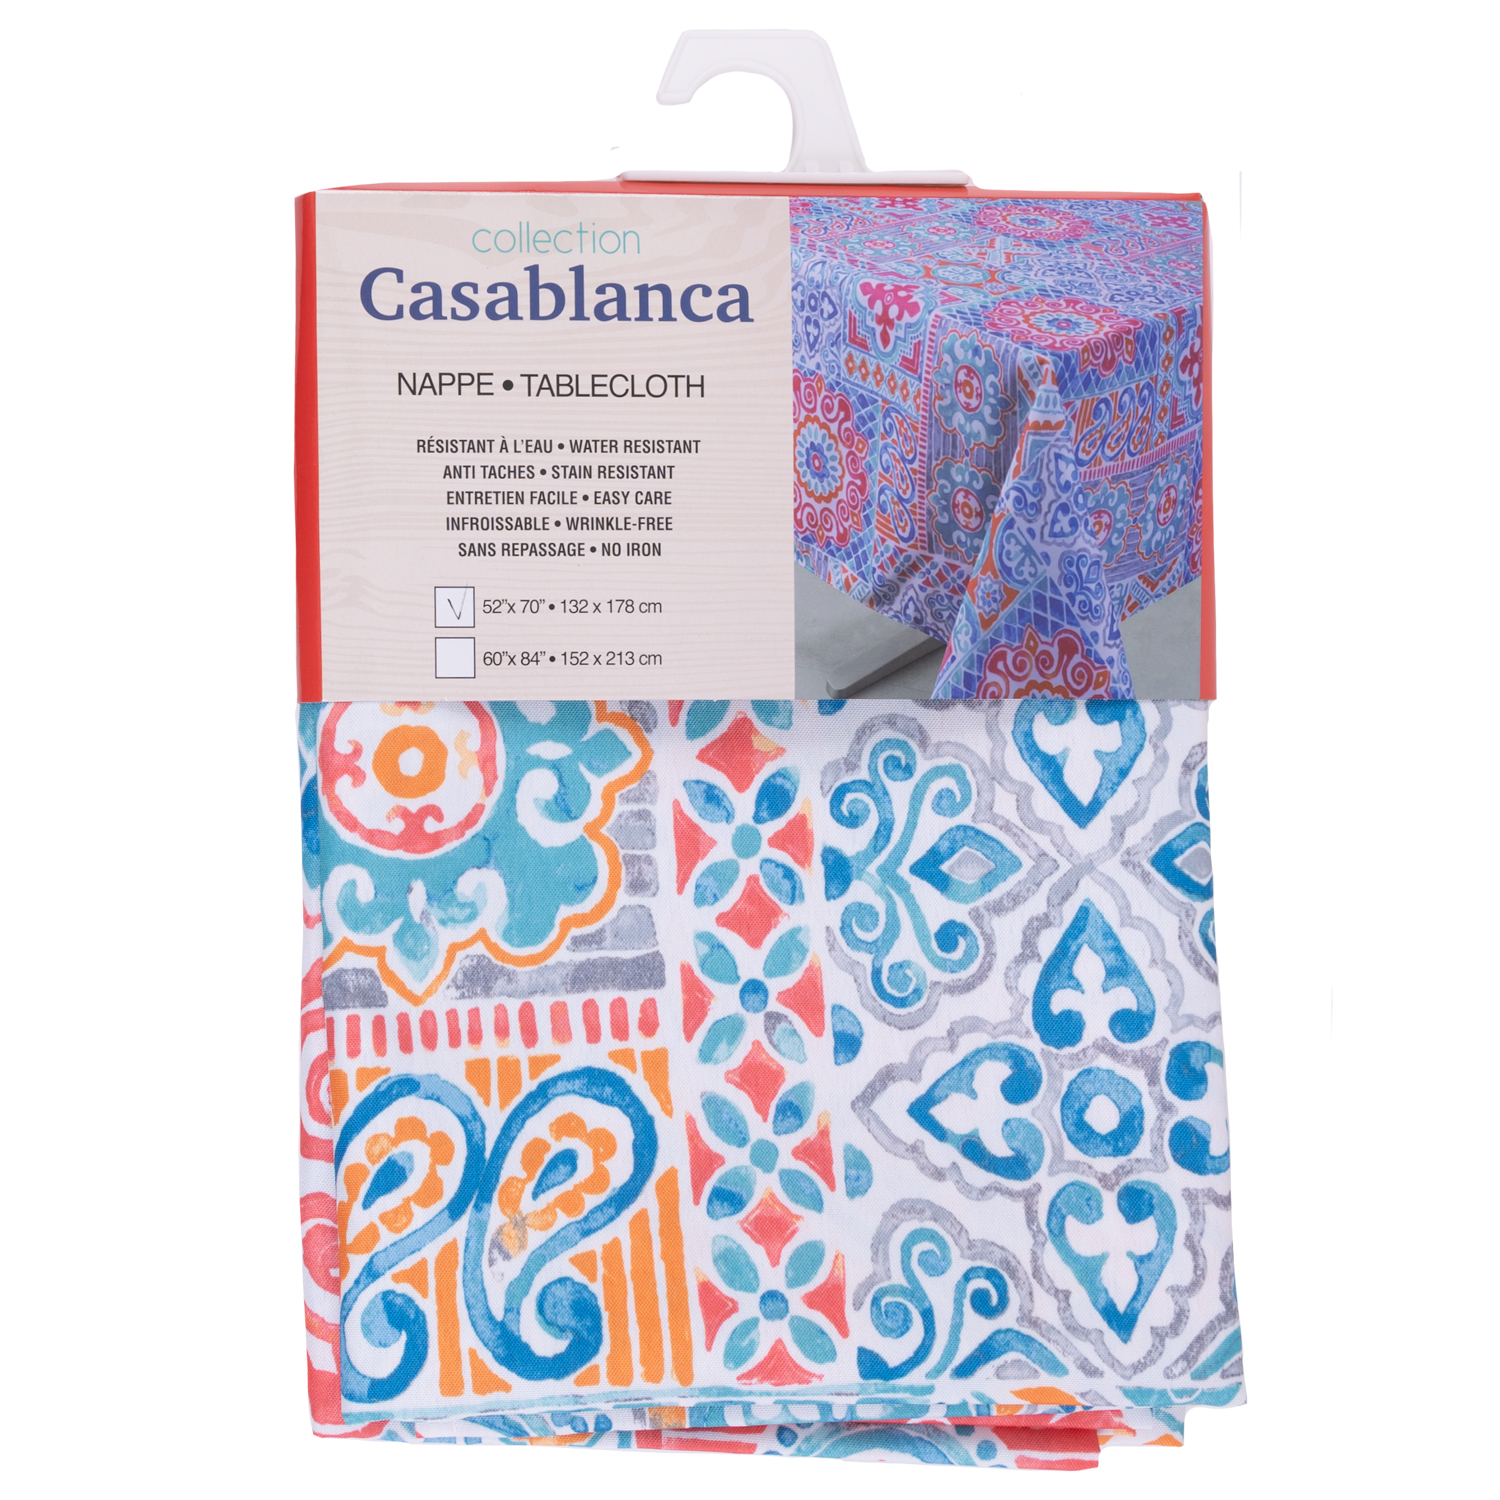 CASABLANCA Collection - Fabric tablecloth, 52"x70" - Lisbon red/aqua